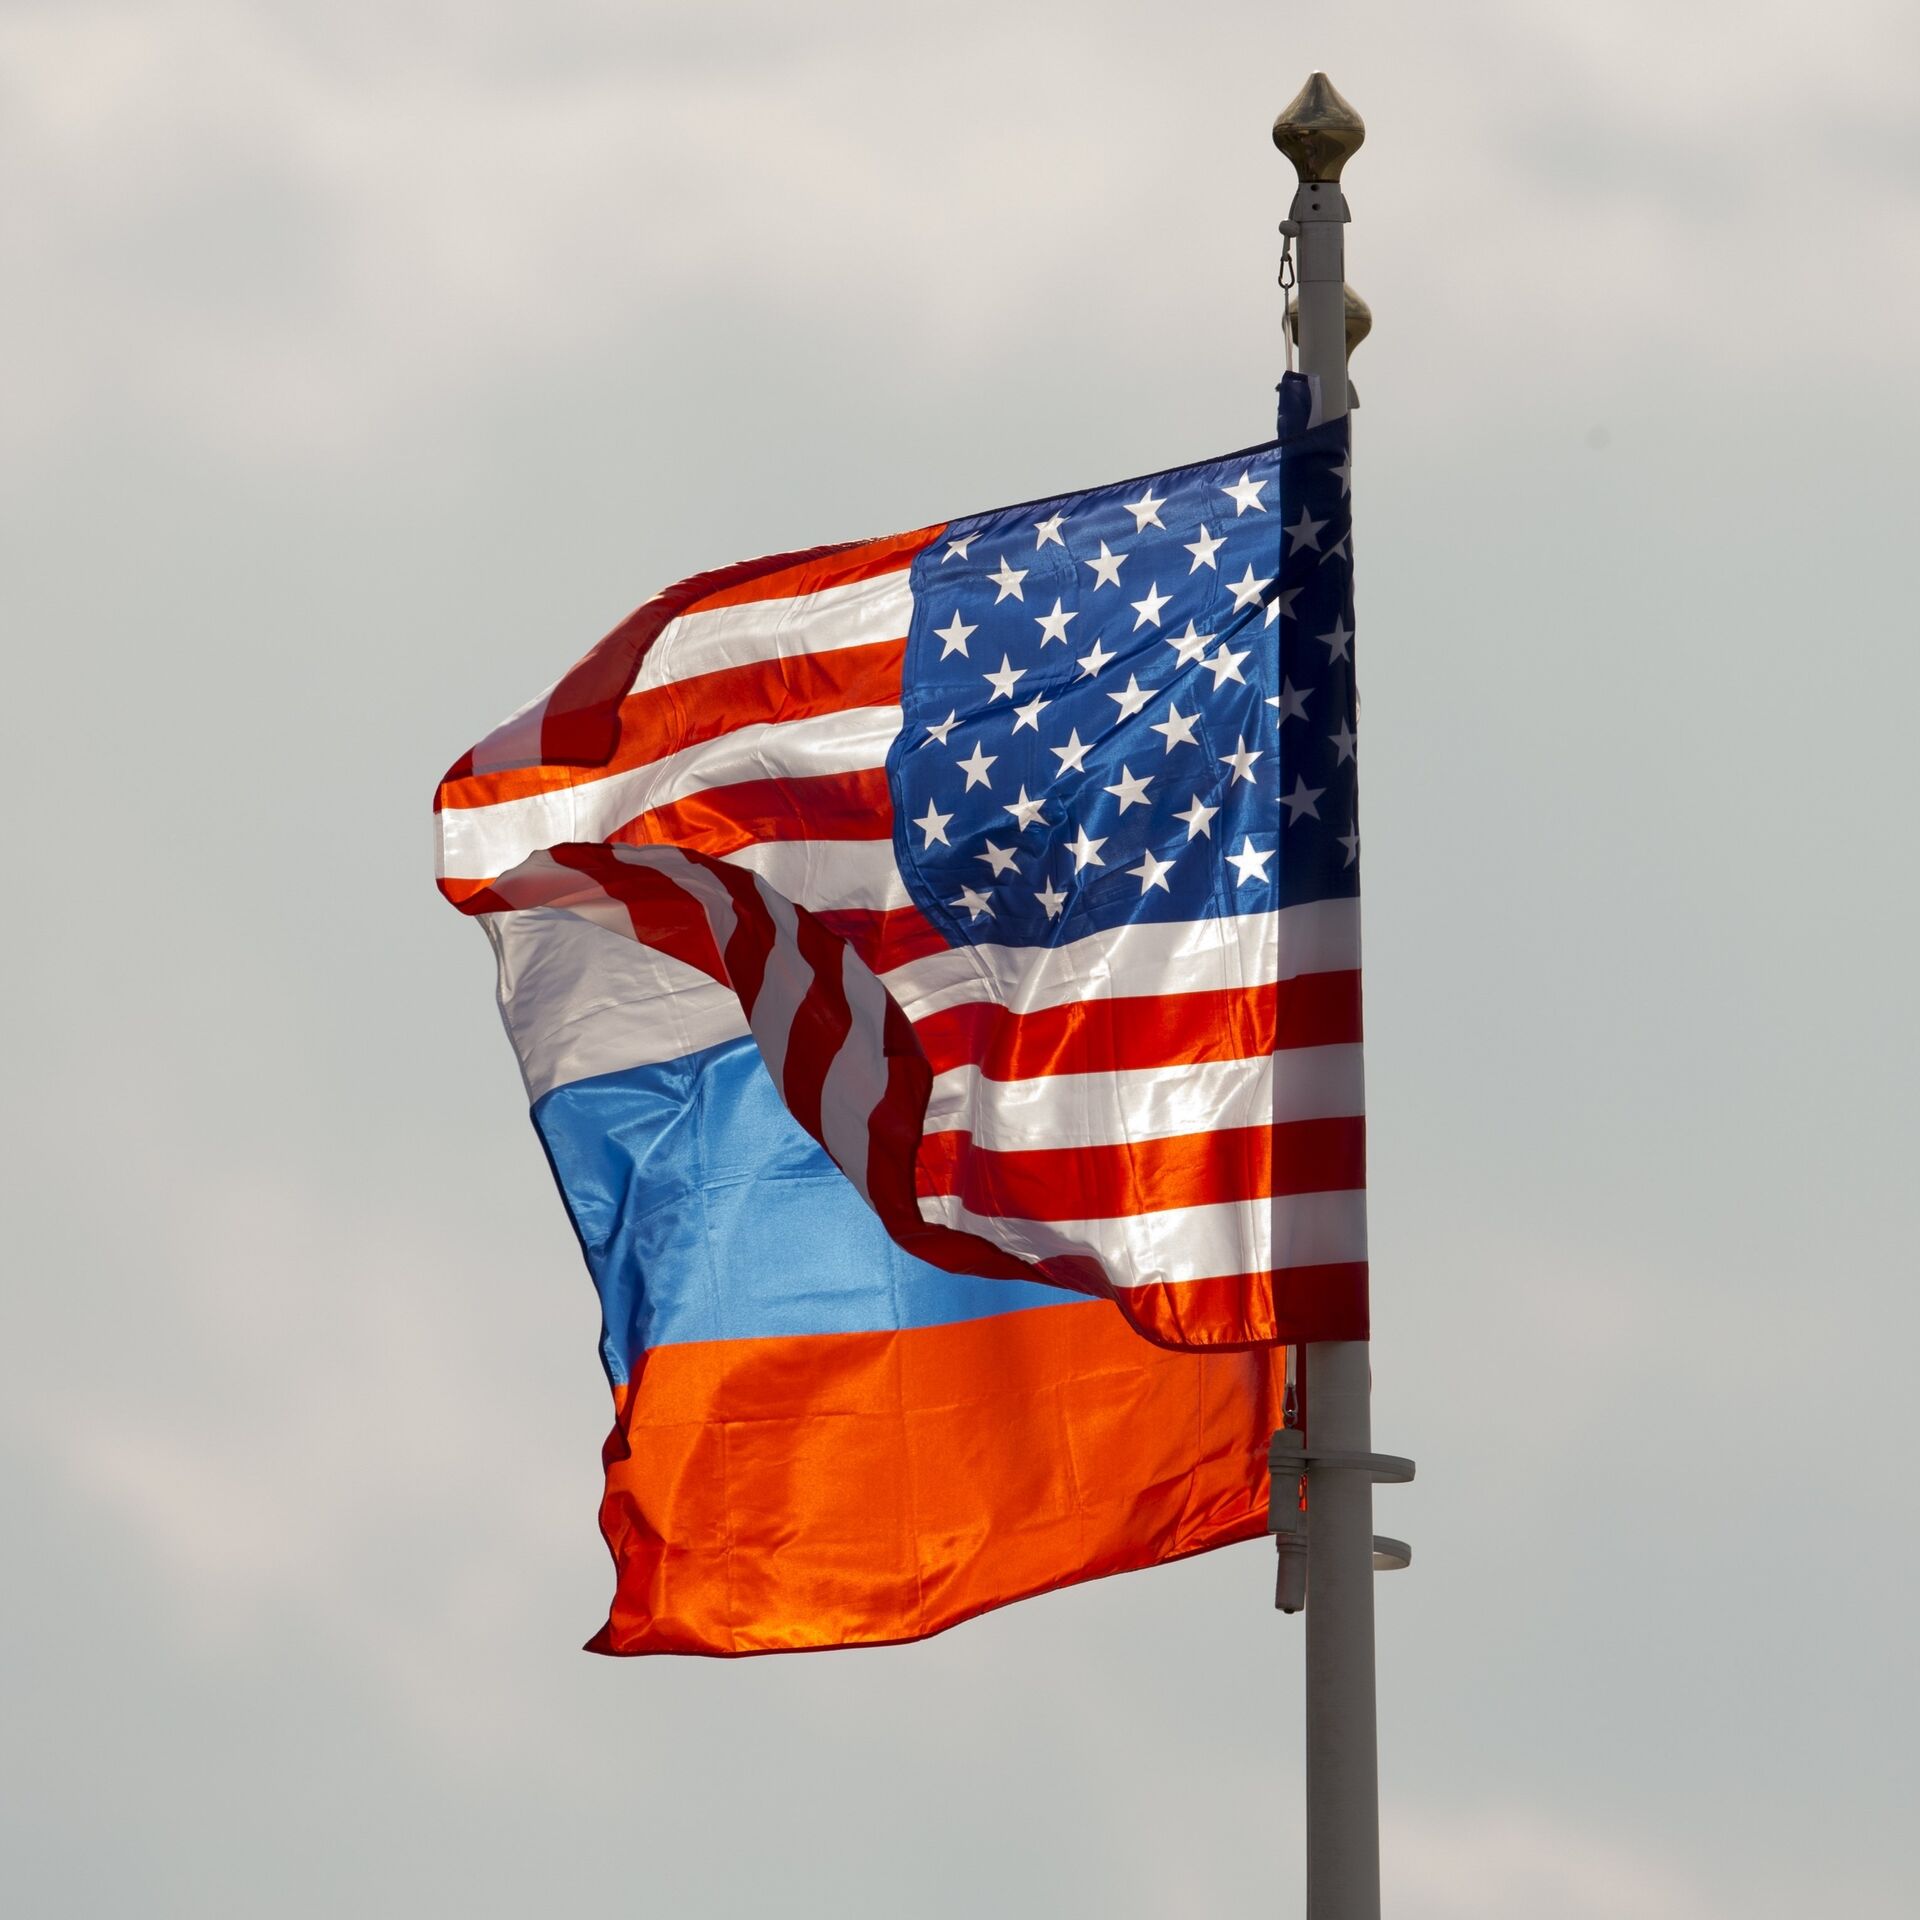 American in russia. США РФ флаг. Флаг России и США. Российский и американский флаги. Россия и США.